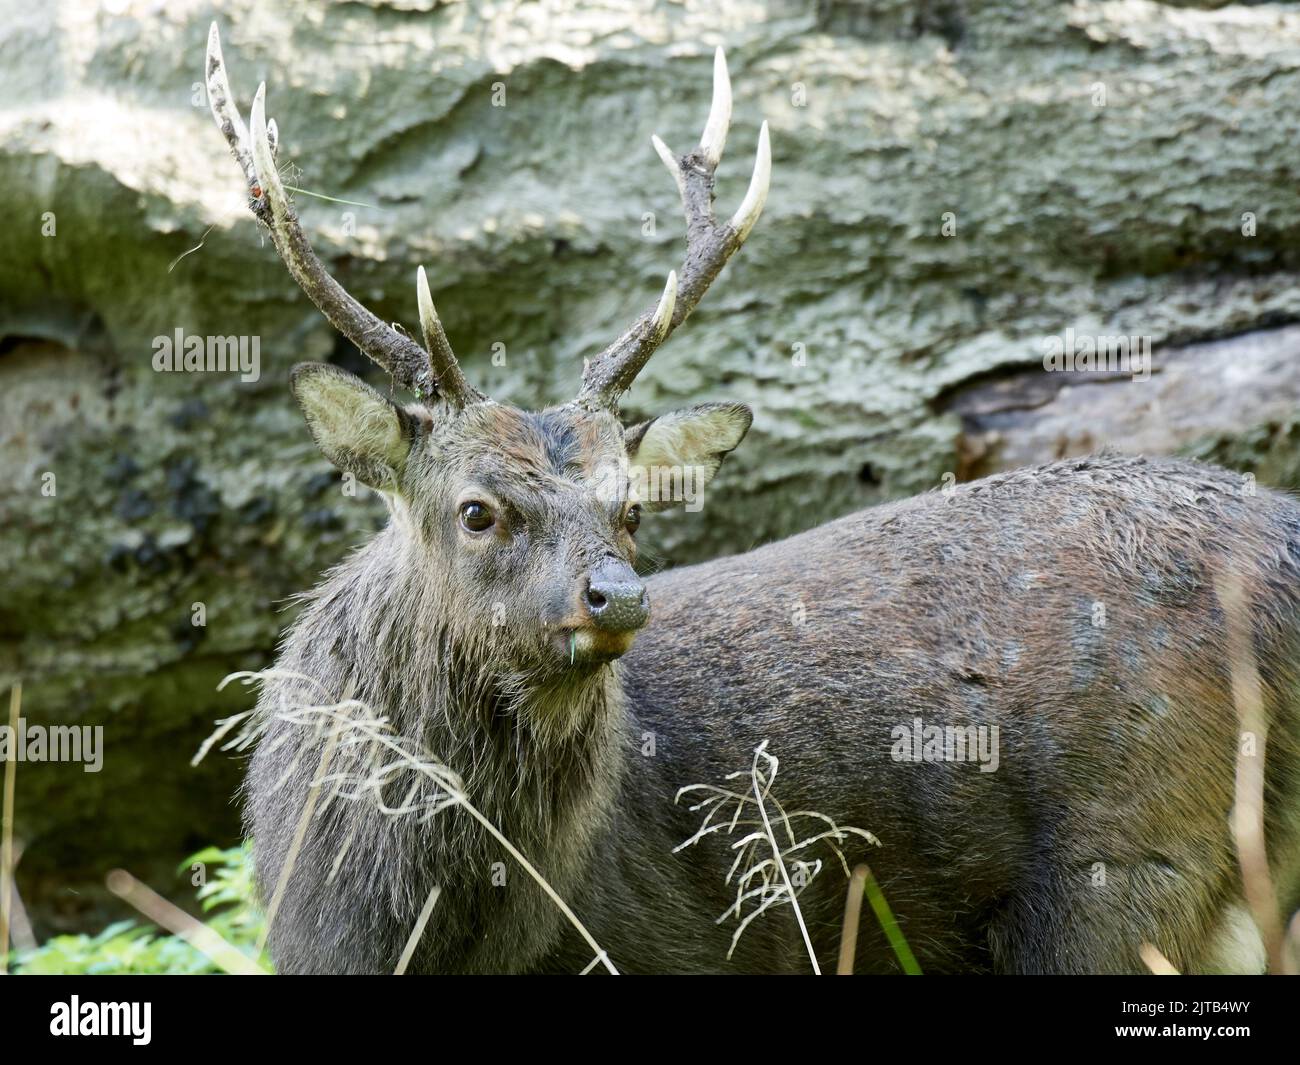 Sika deer in its natural habitat in Denmark Stock Photo